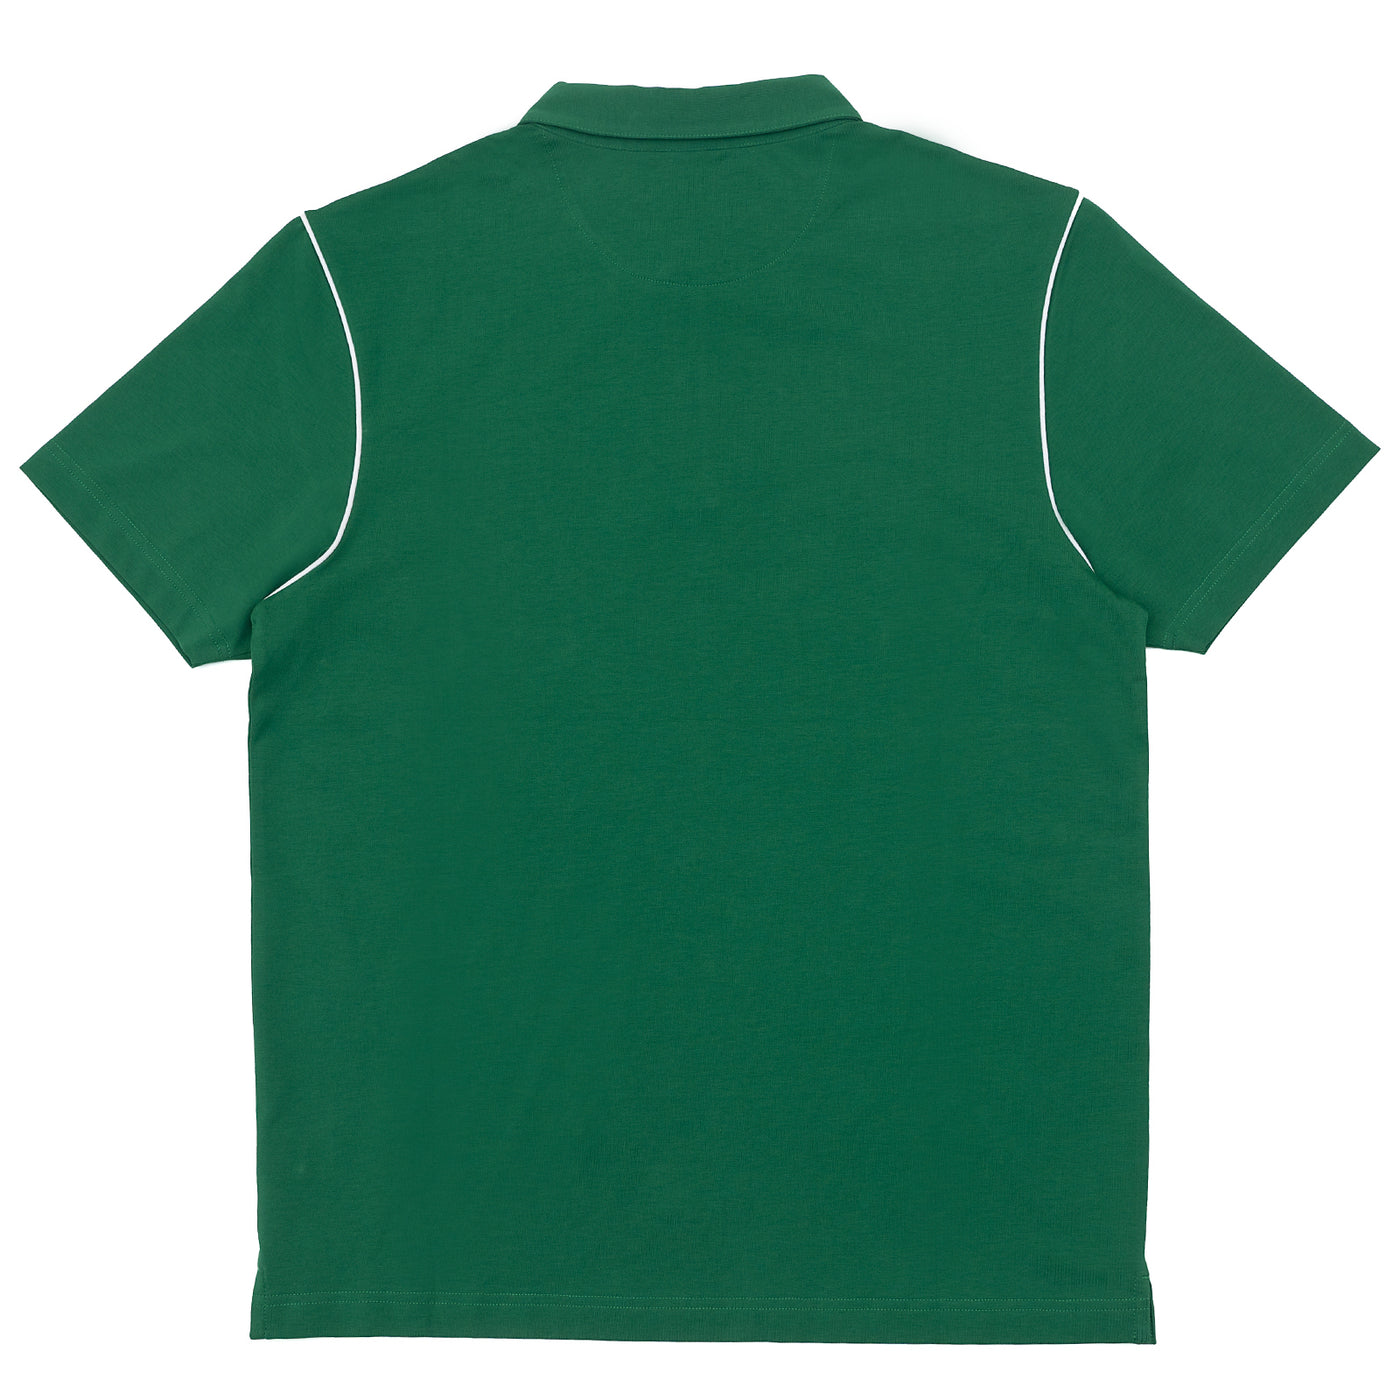 M344 Makobi Ricci Core Polo Shirt- Green